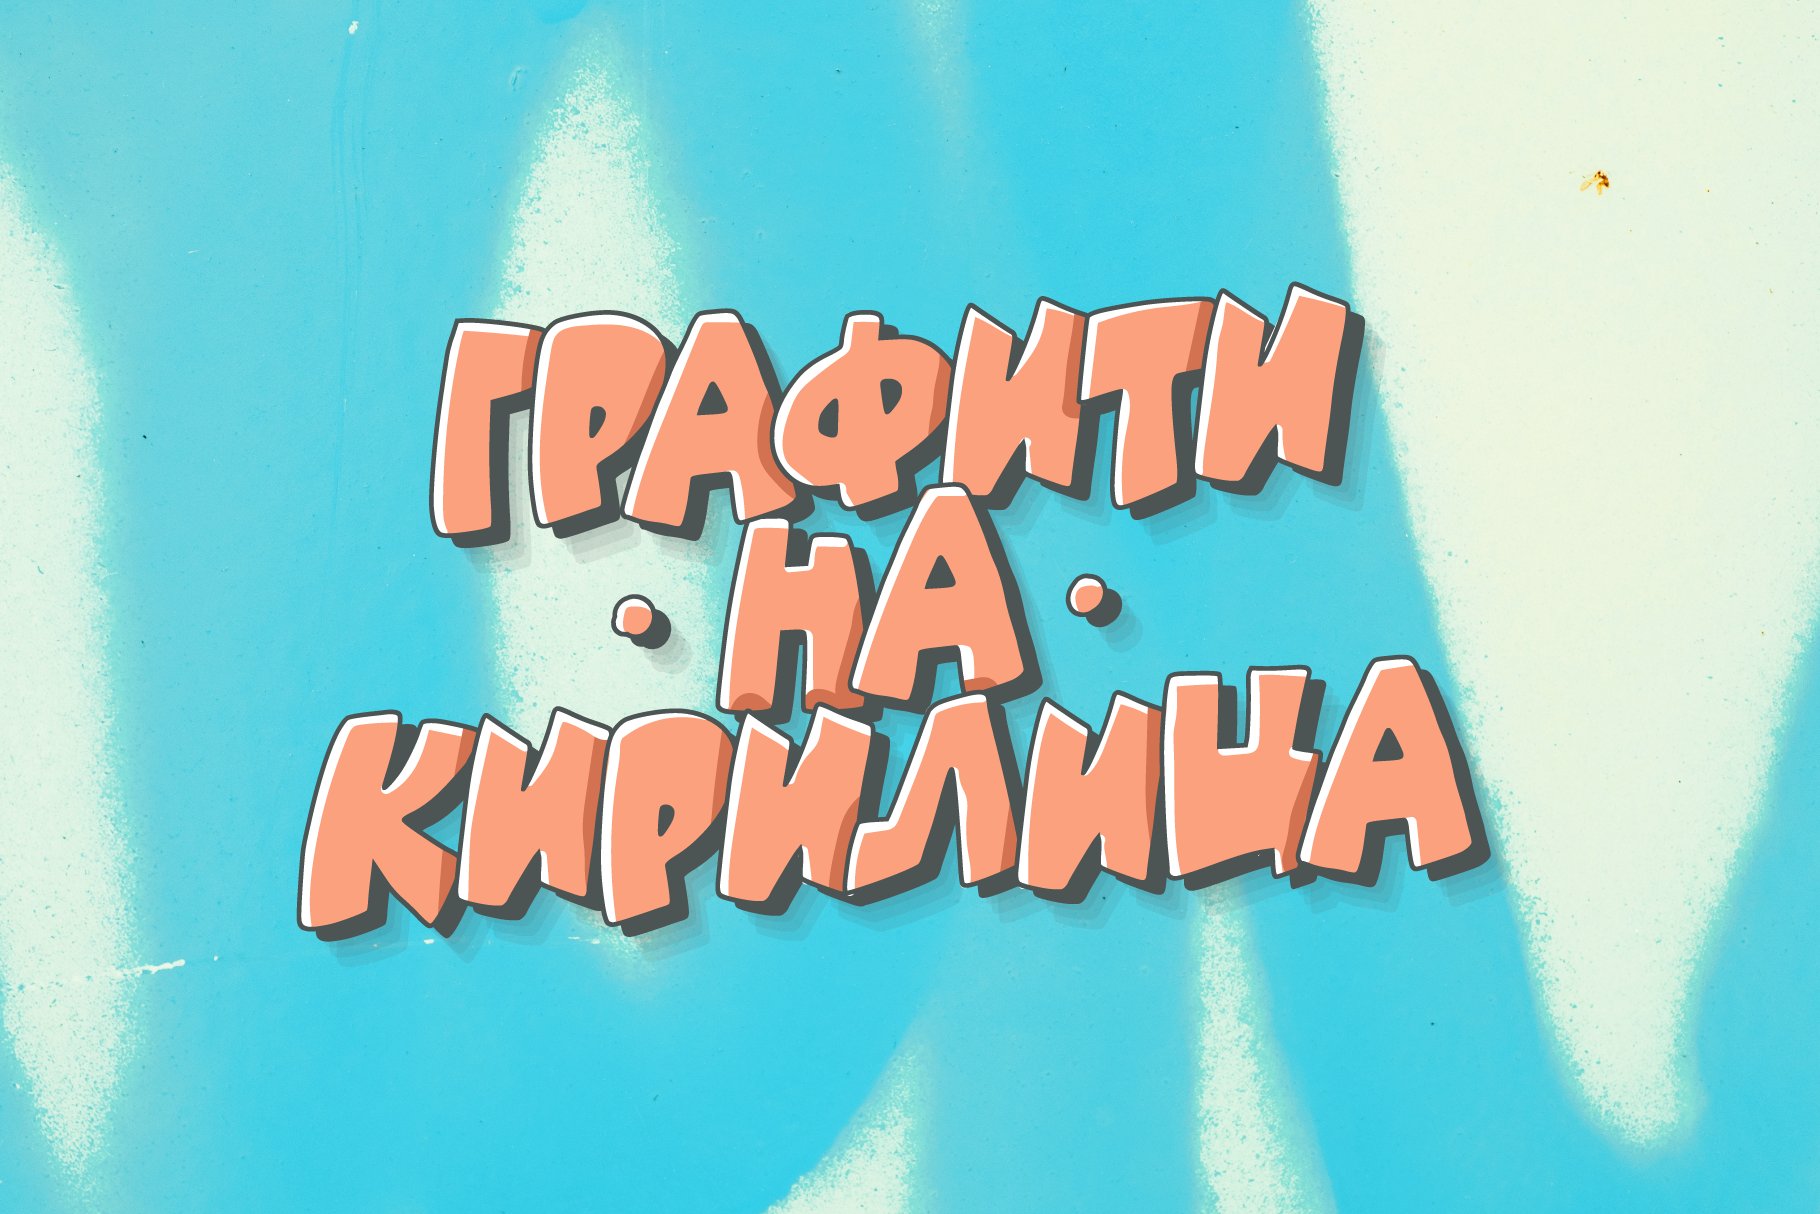 Cyrillic Graffiti Font cover image.